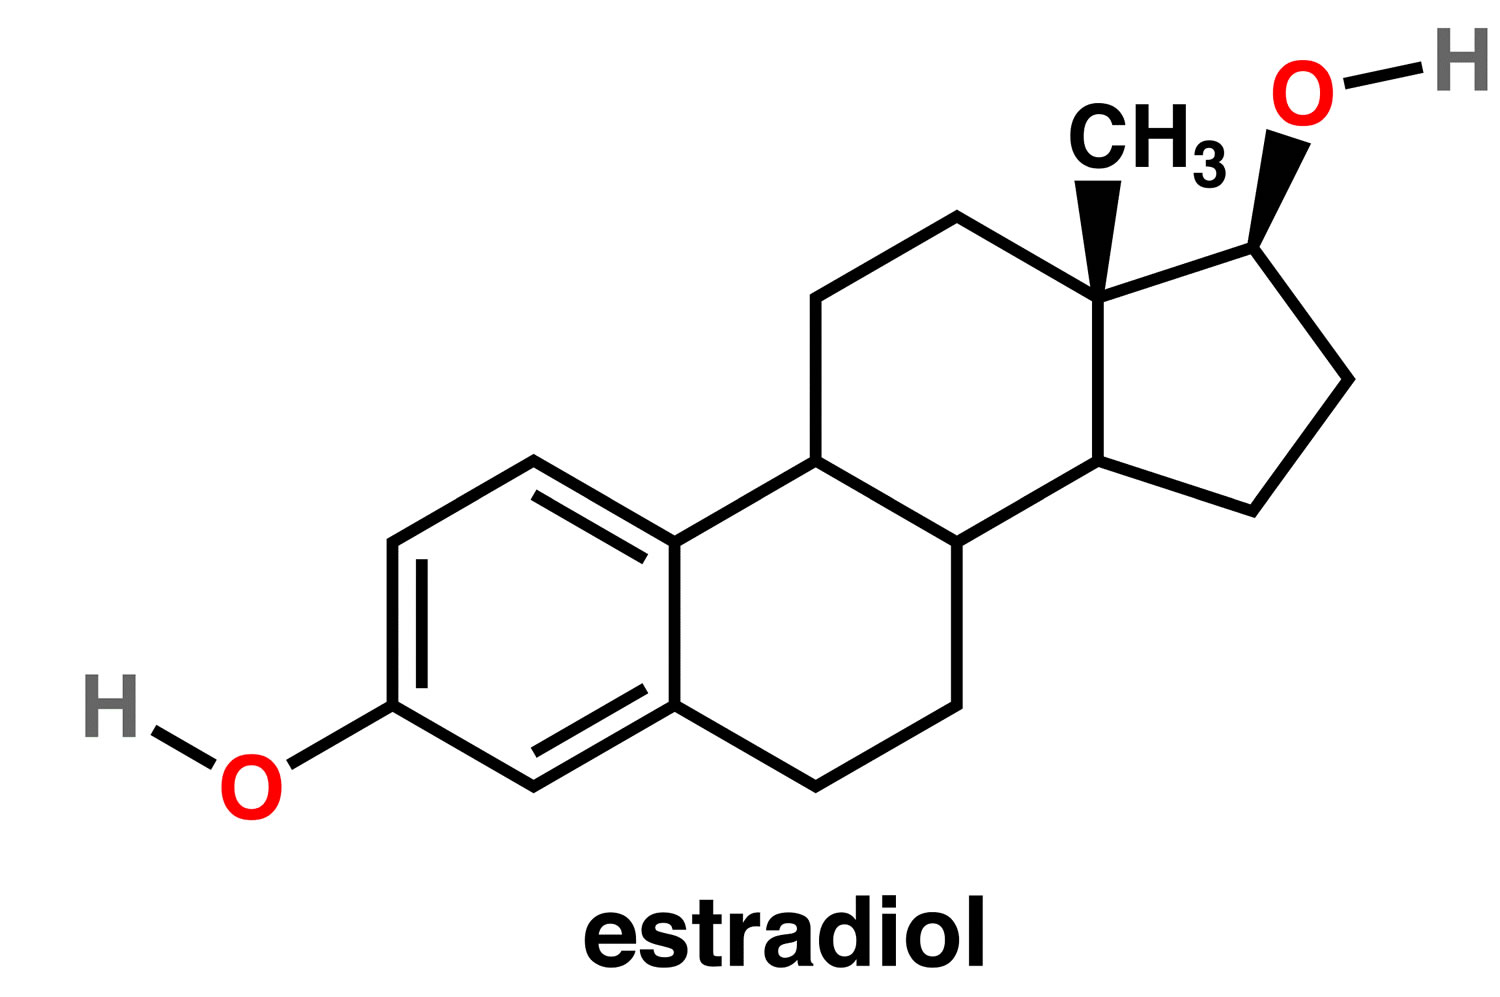 Estradiol 